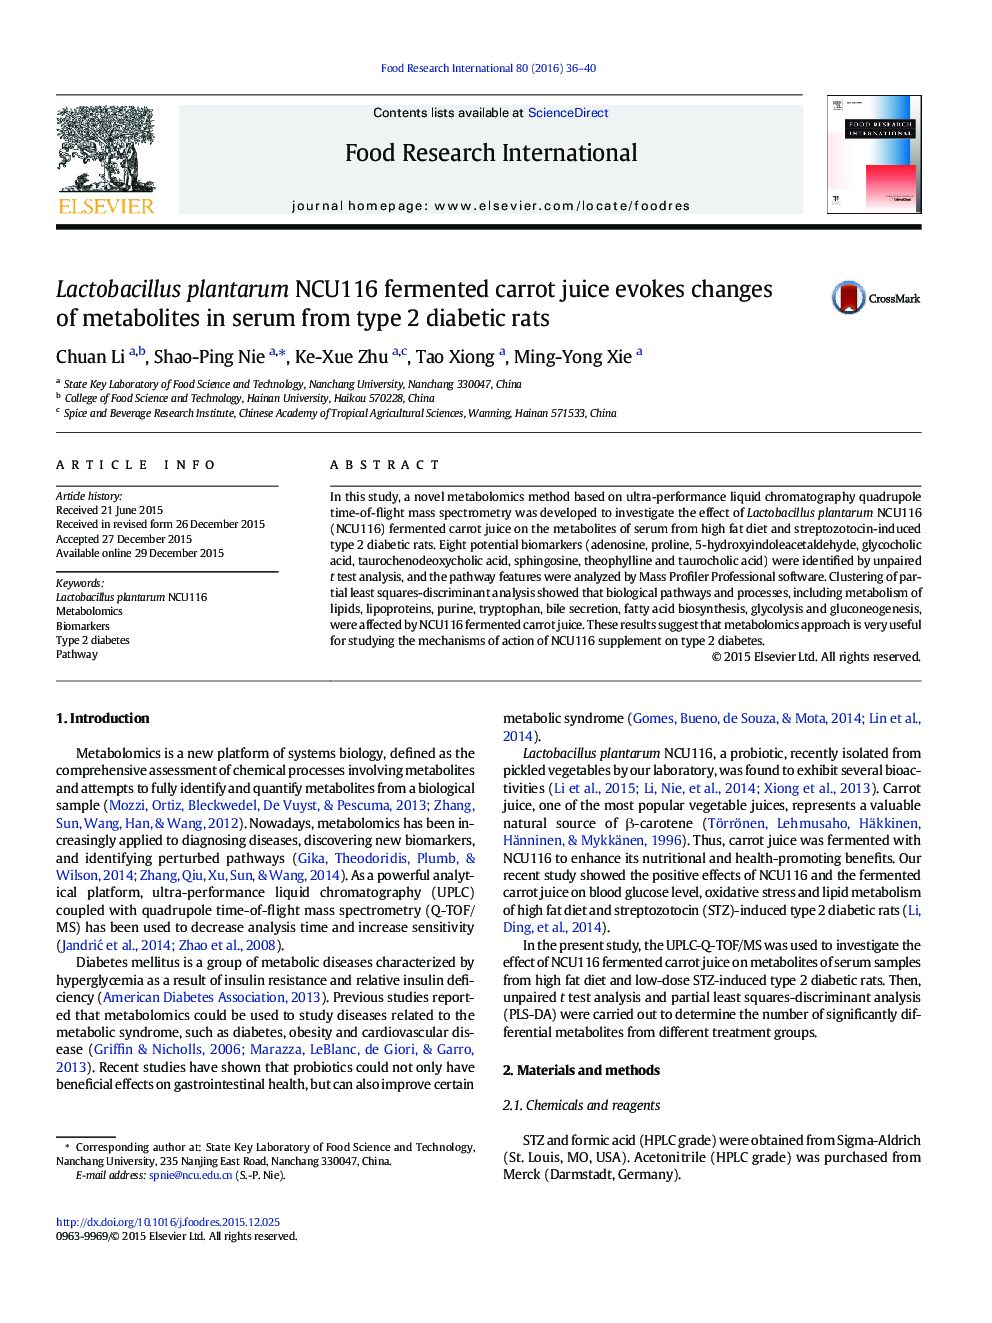 Lactobacillus plantarum NCU116 fermented carrot juice evokes changes of metabolites in serum from type 2 diabetic rats